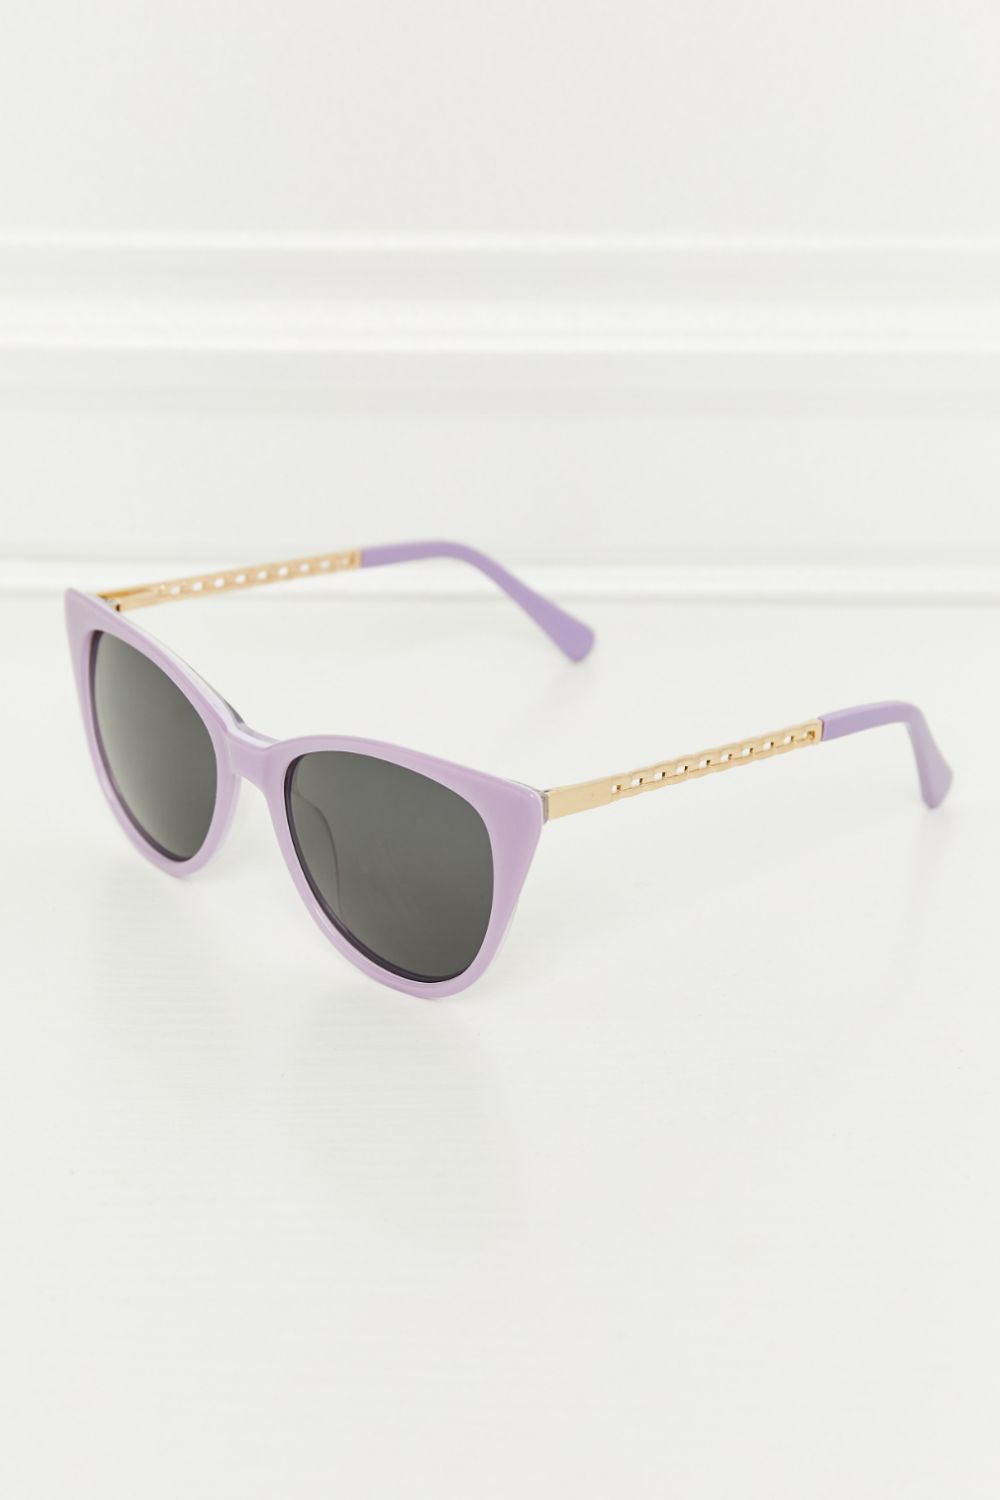 Cat-Eye Acetate Frame Sunglasses Lavender One Size Sunglasses by Vim&Vigor | Vim&Vigor Boutique